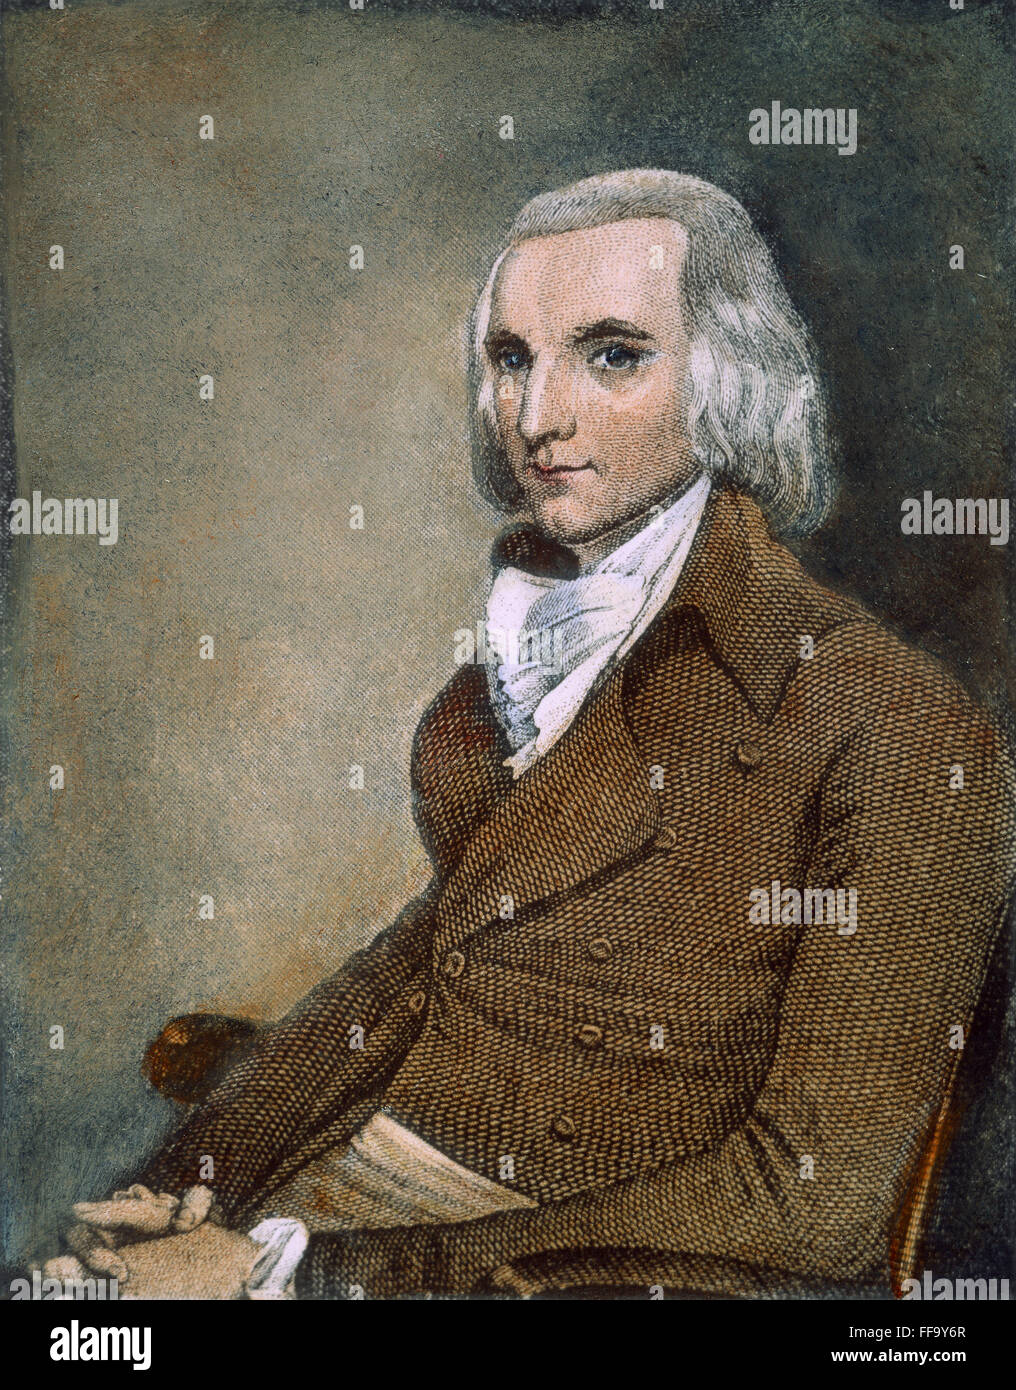 JOHN JACOB ASTOR (1763-1848). /nAmerican fur trader and financier. American steel engraving, 19th century. Stock Photo